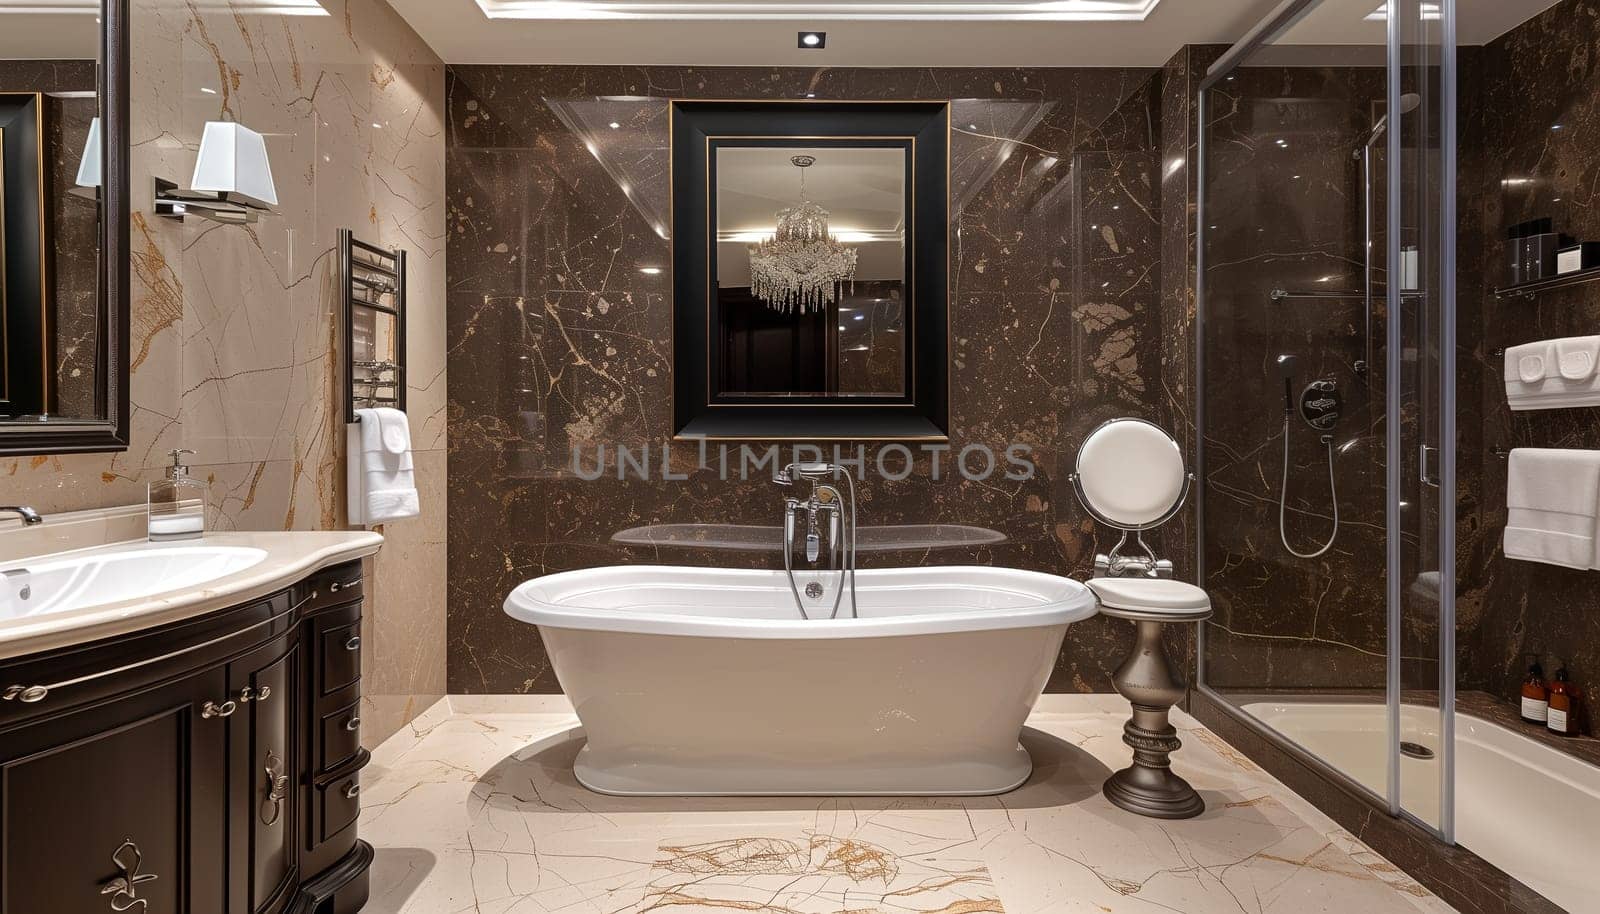 Beautiful Large Bathroom in Luxury Home.